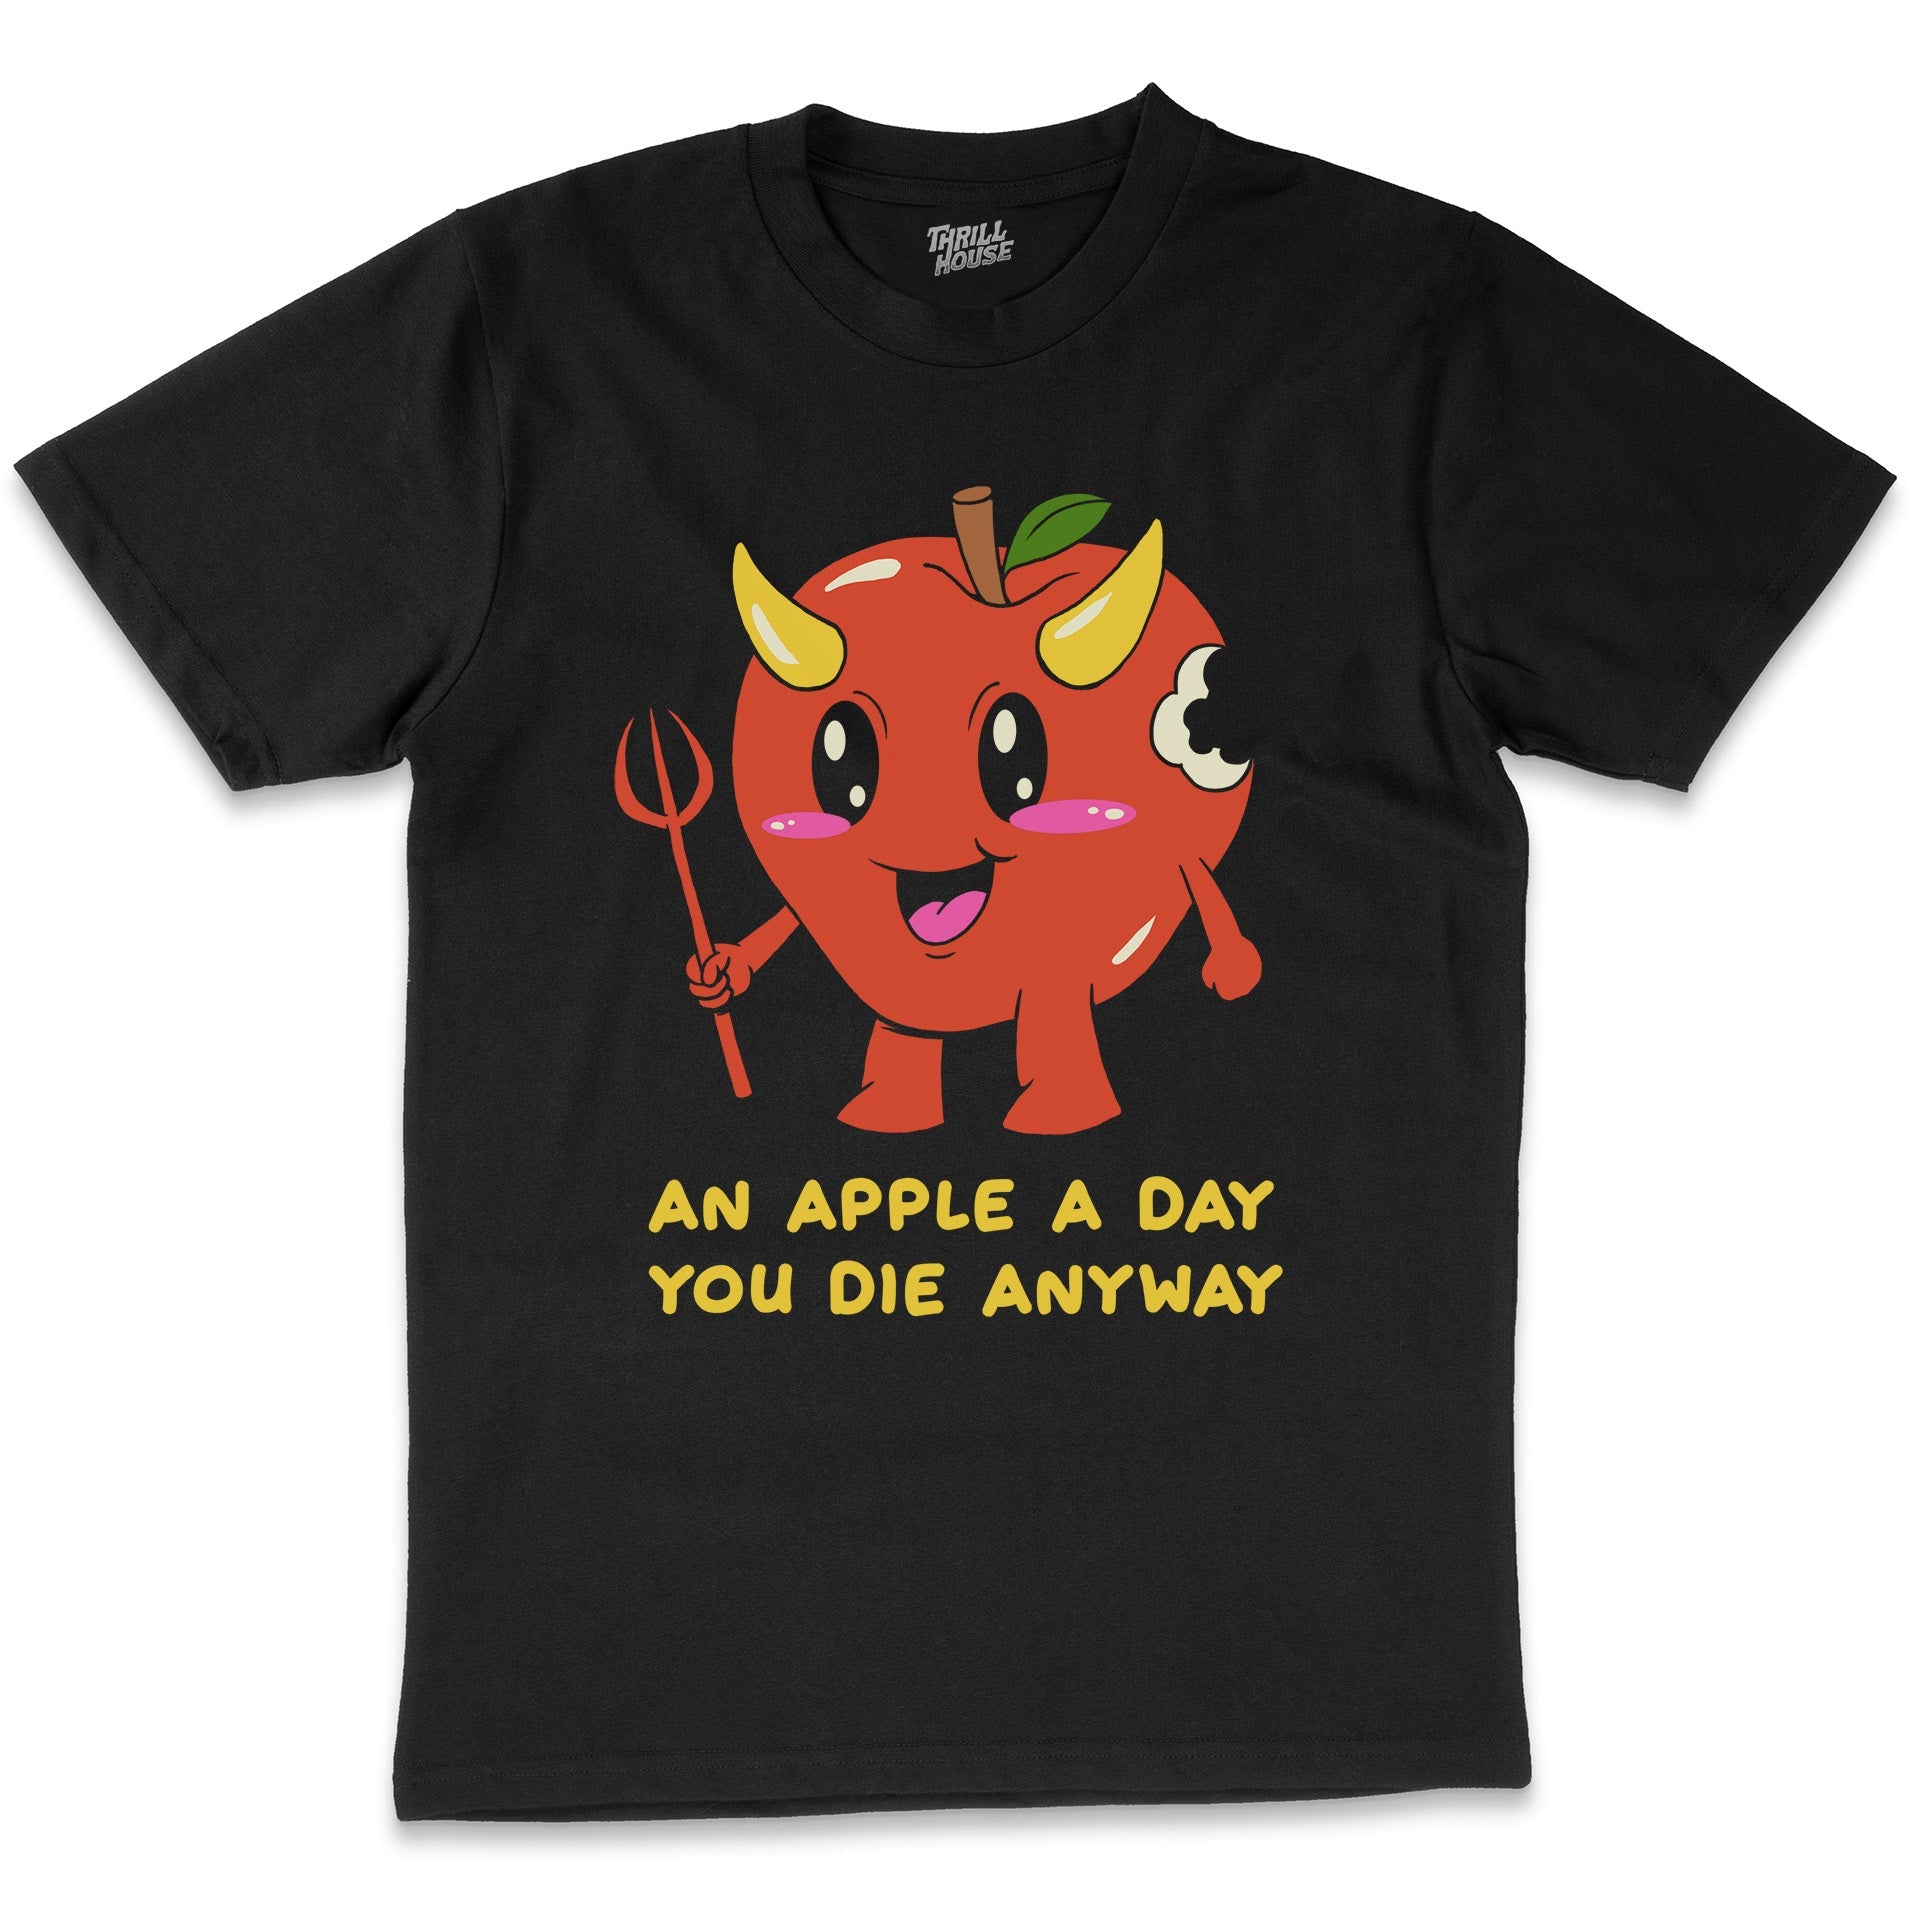 Bad Apple Funny Dark Humour Parody Slogan Food Cotton Novelty T-Shirt